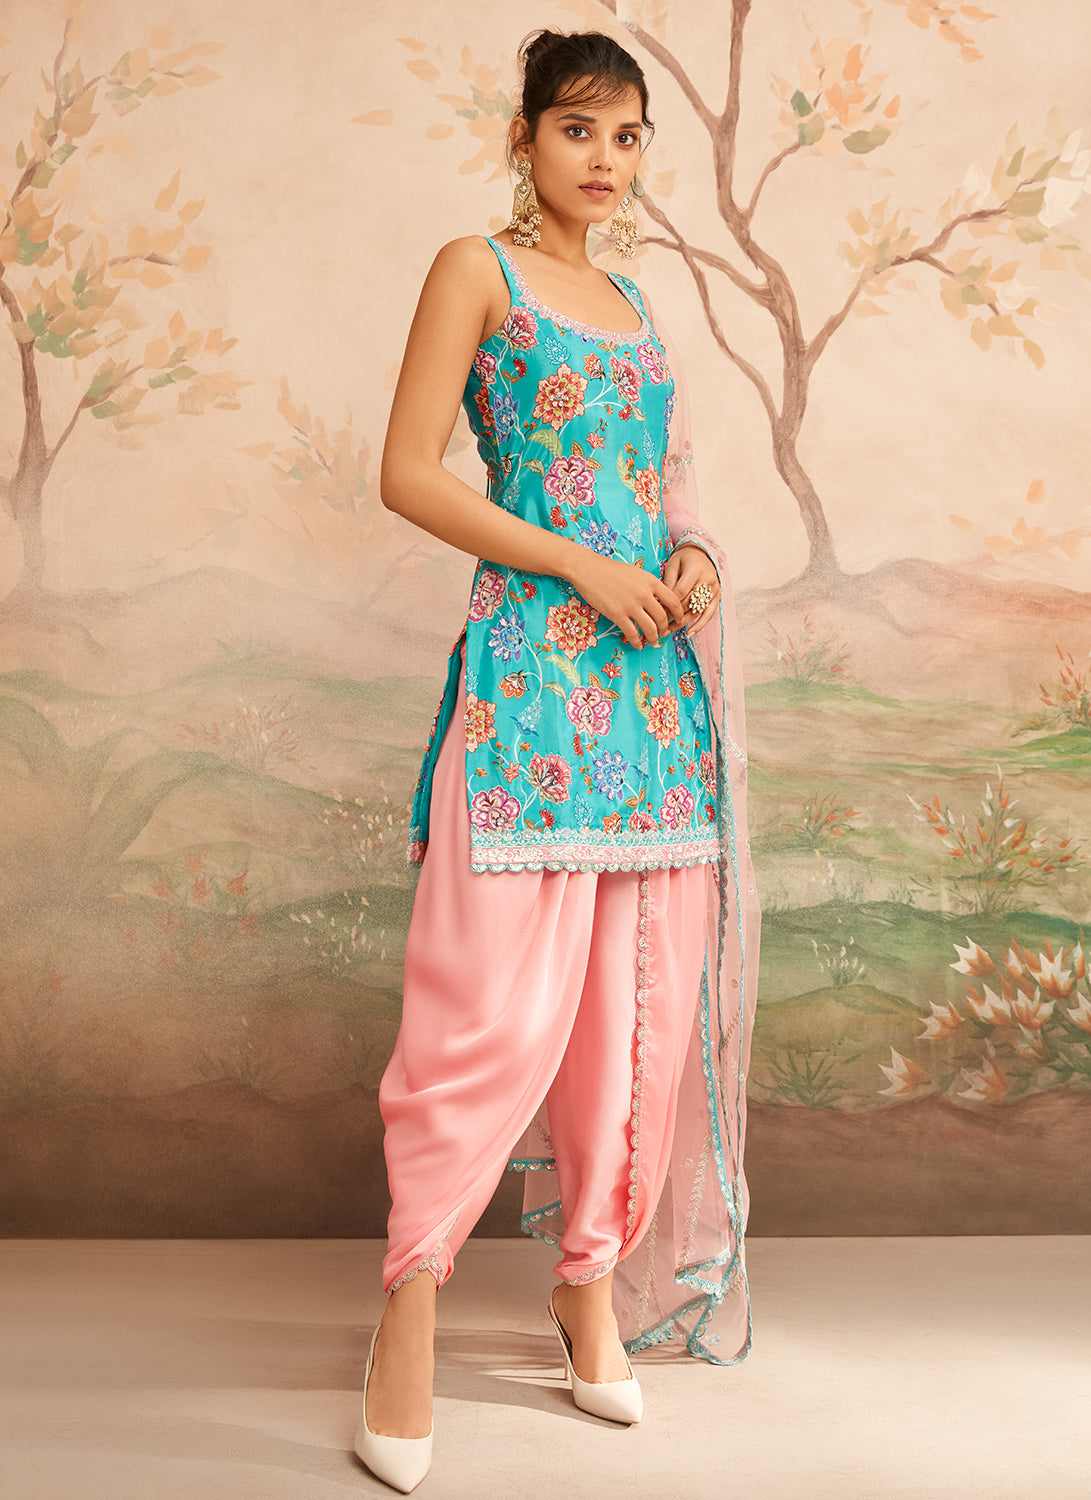 Teal and Pink Floral Printed Punjabi Suit